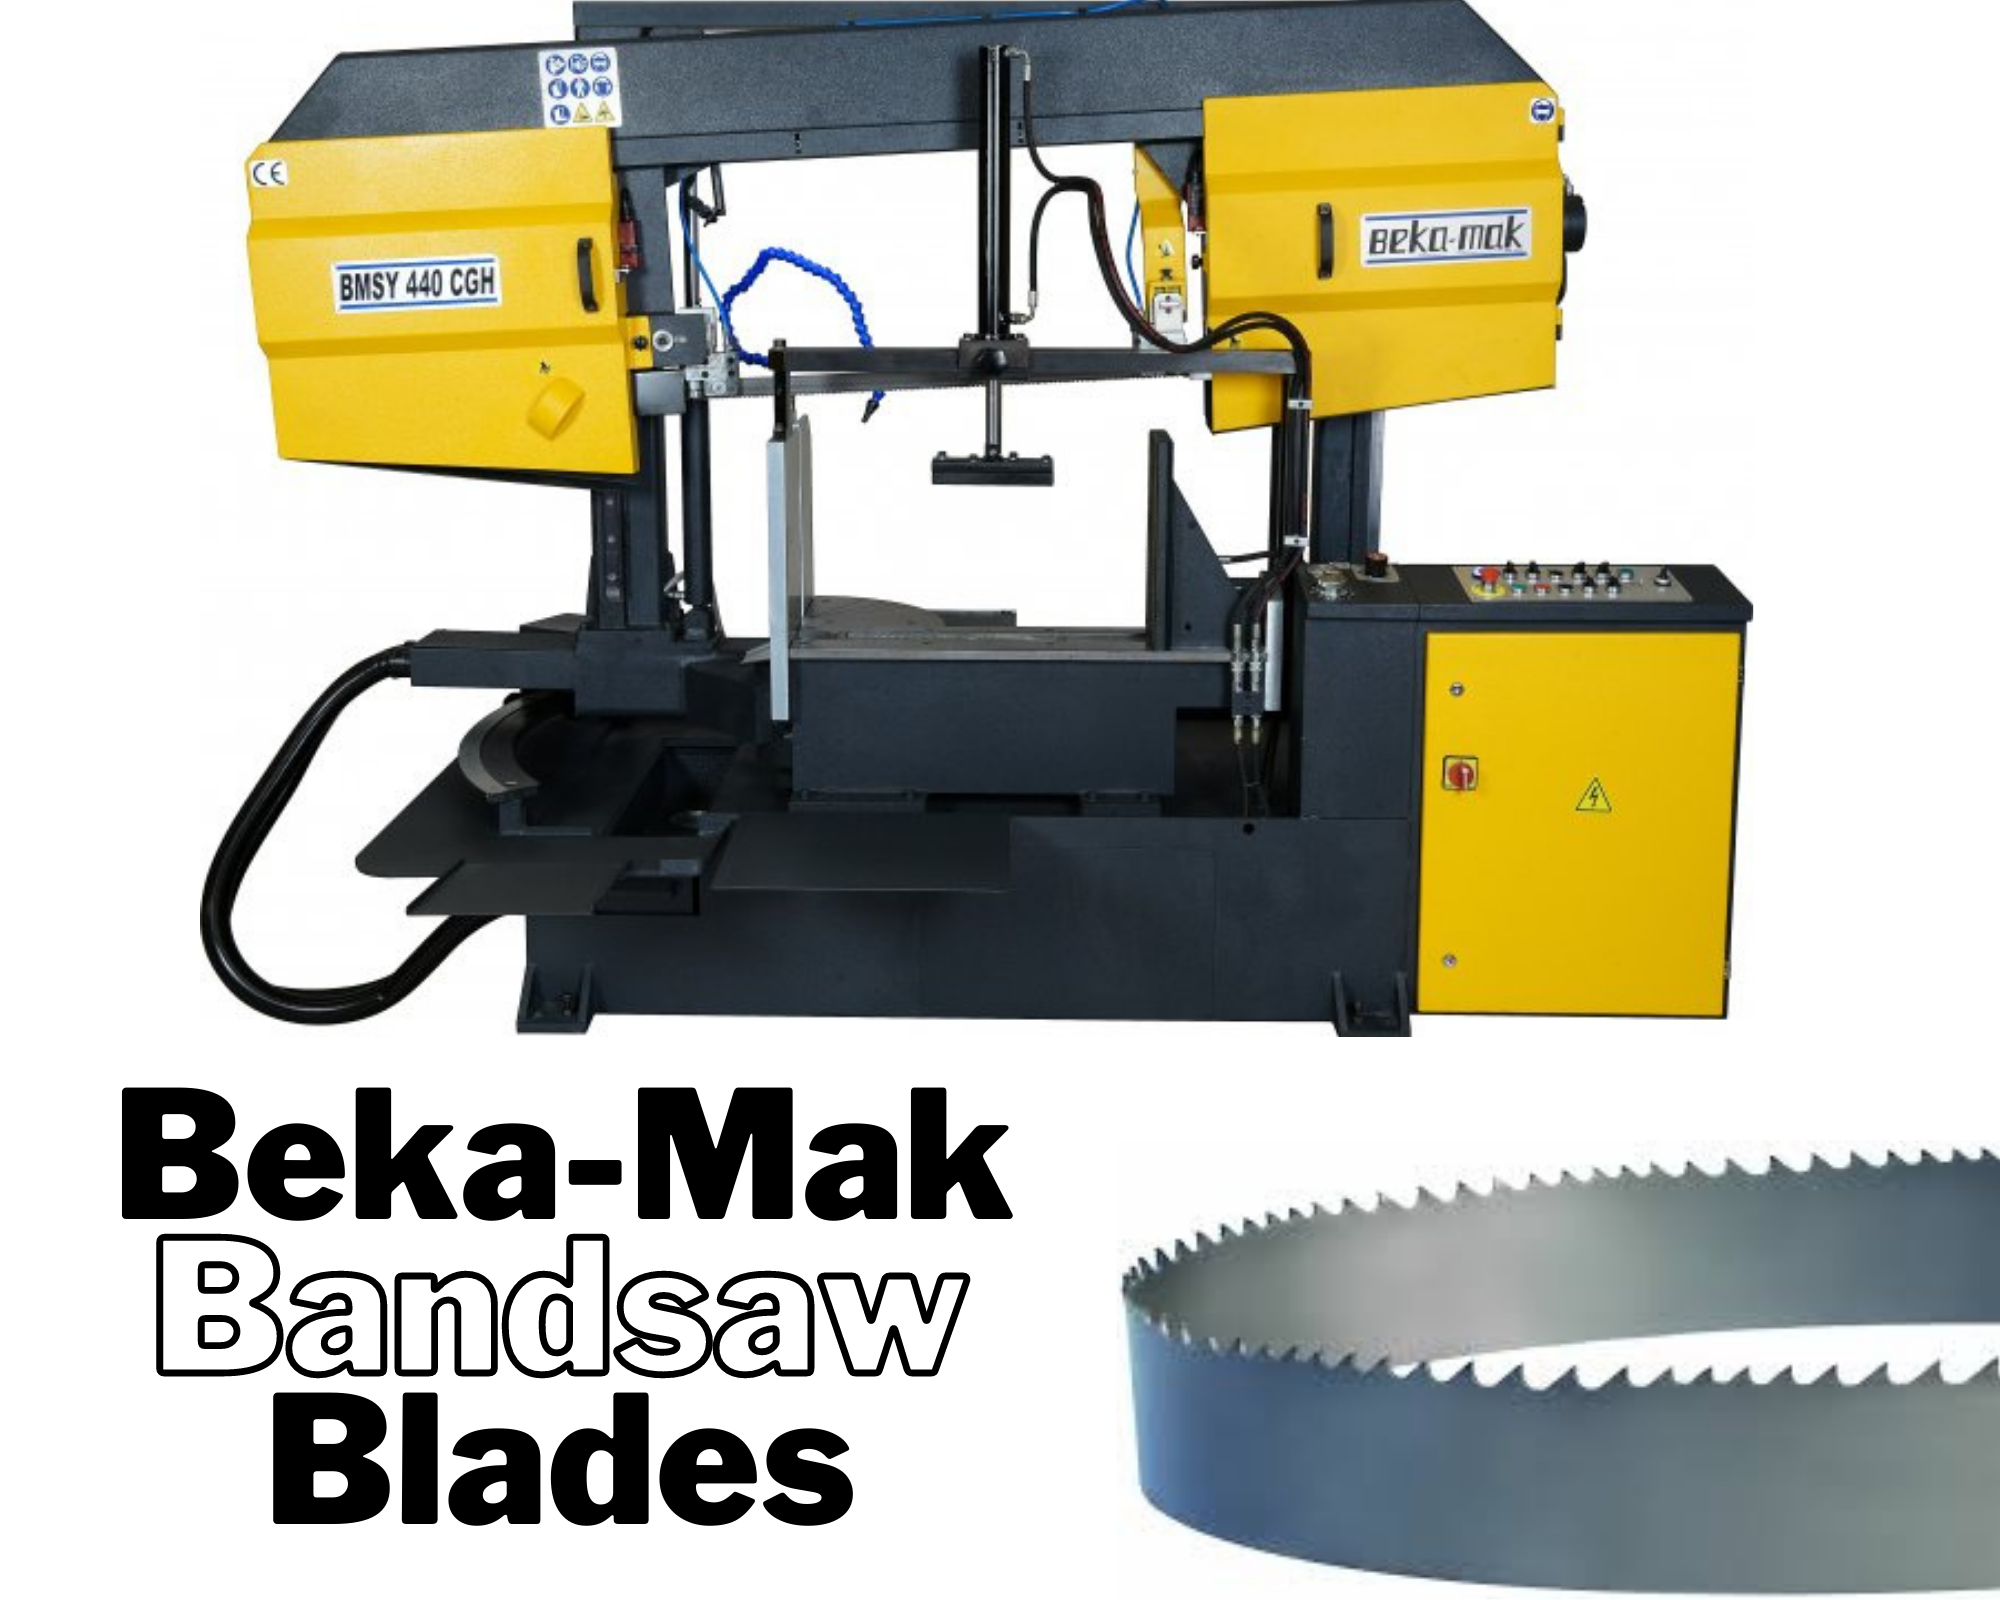 Beka-Mak Bandsaw Blades